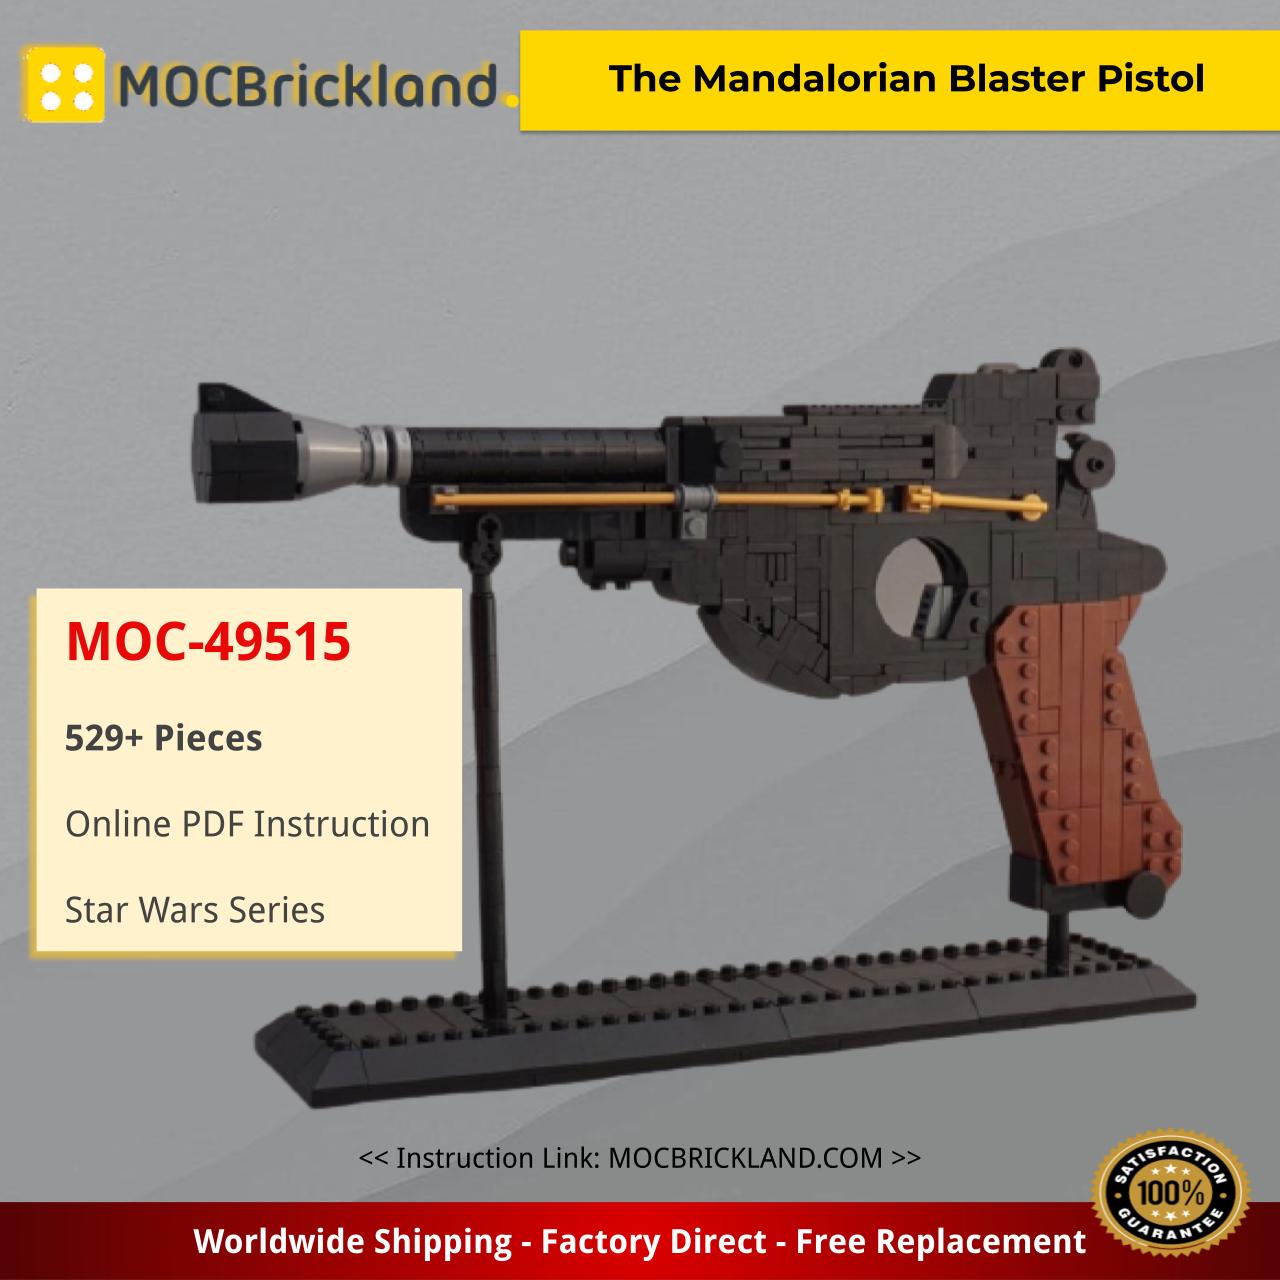 MOCBRICKLAND MOC-49515 The Mandalorian Blaster Pistol